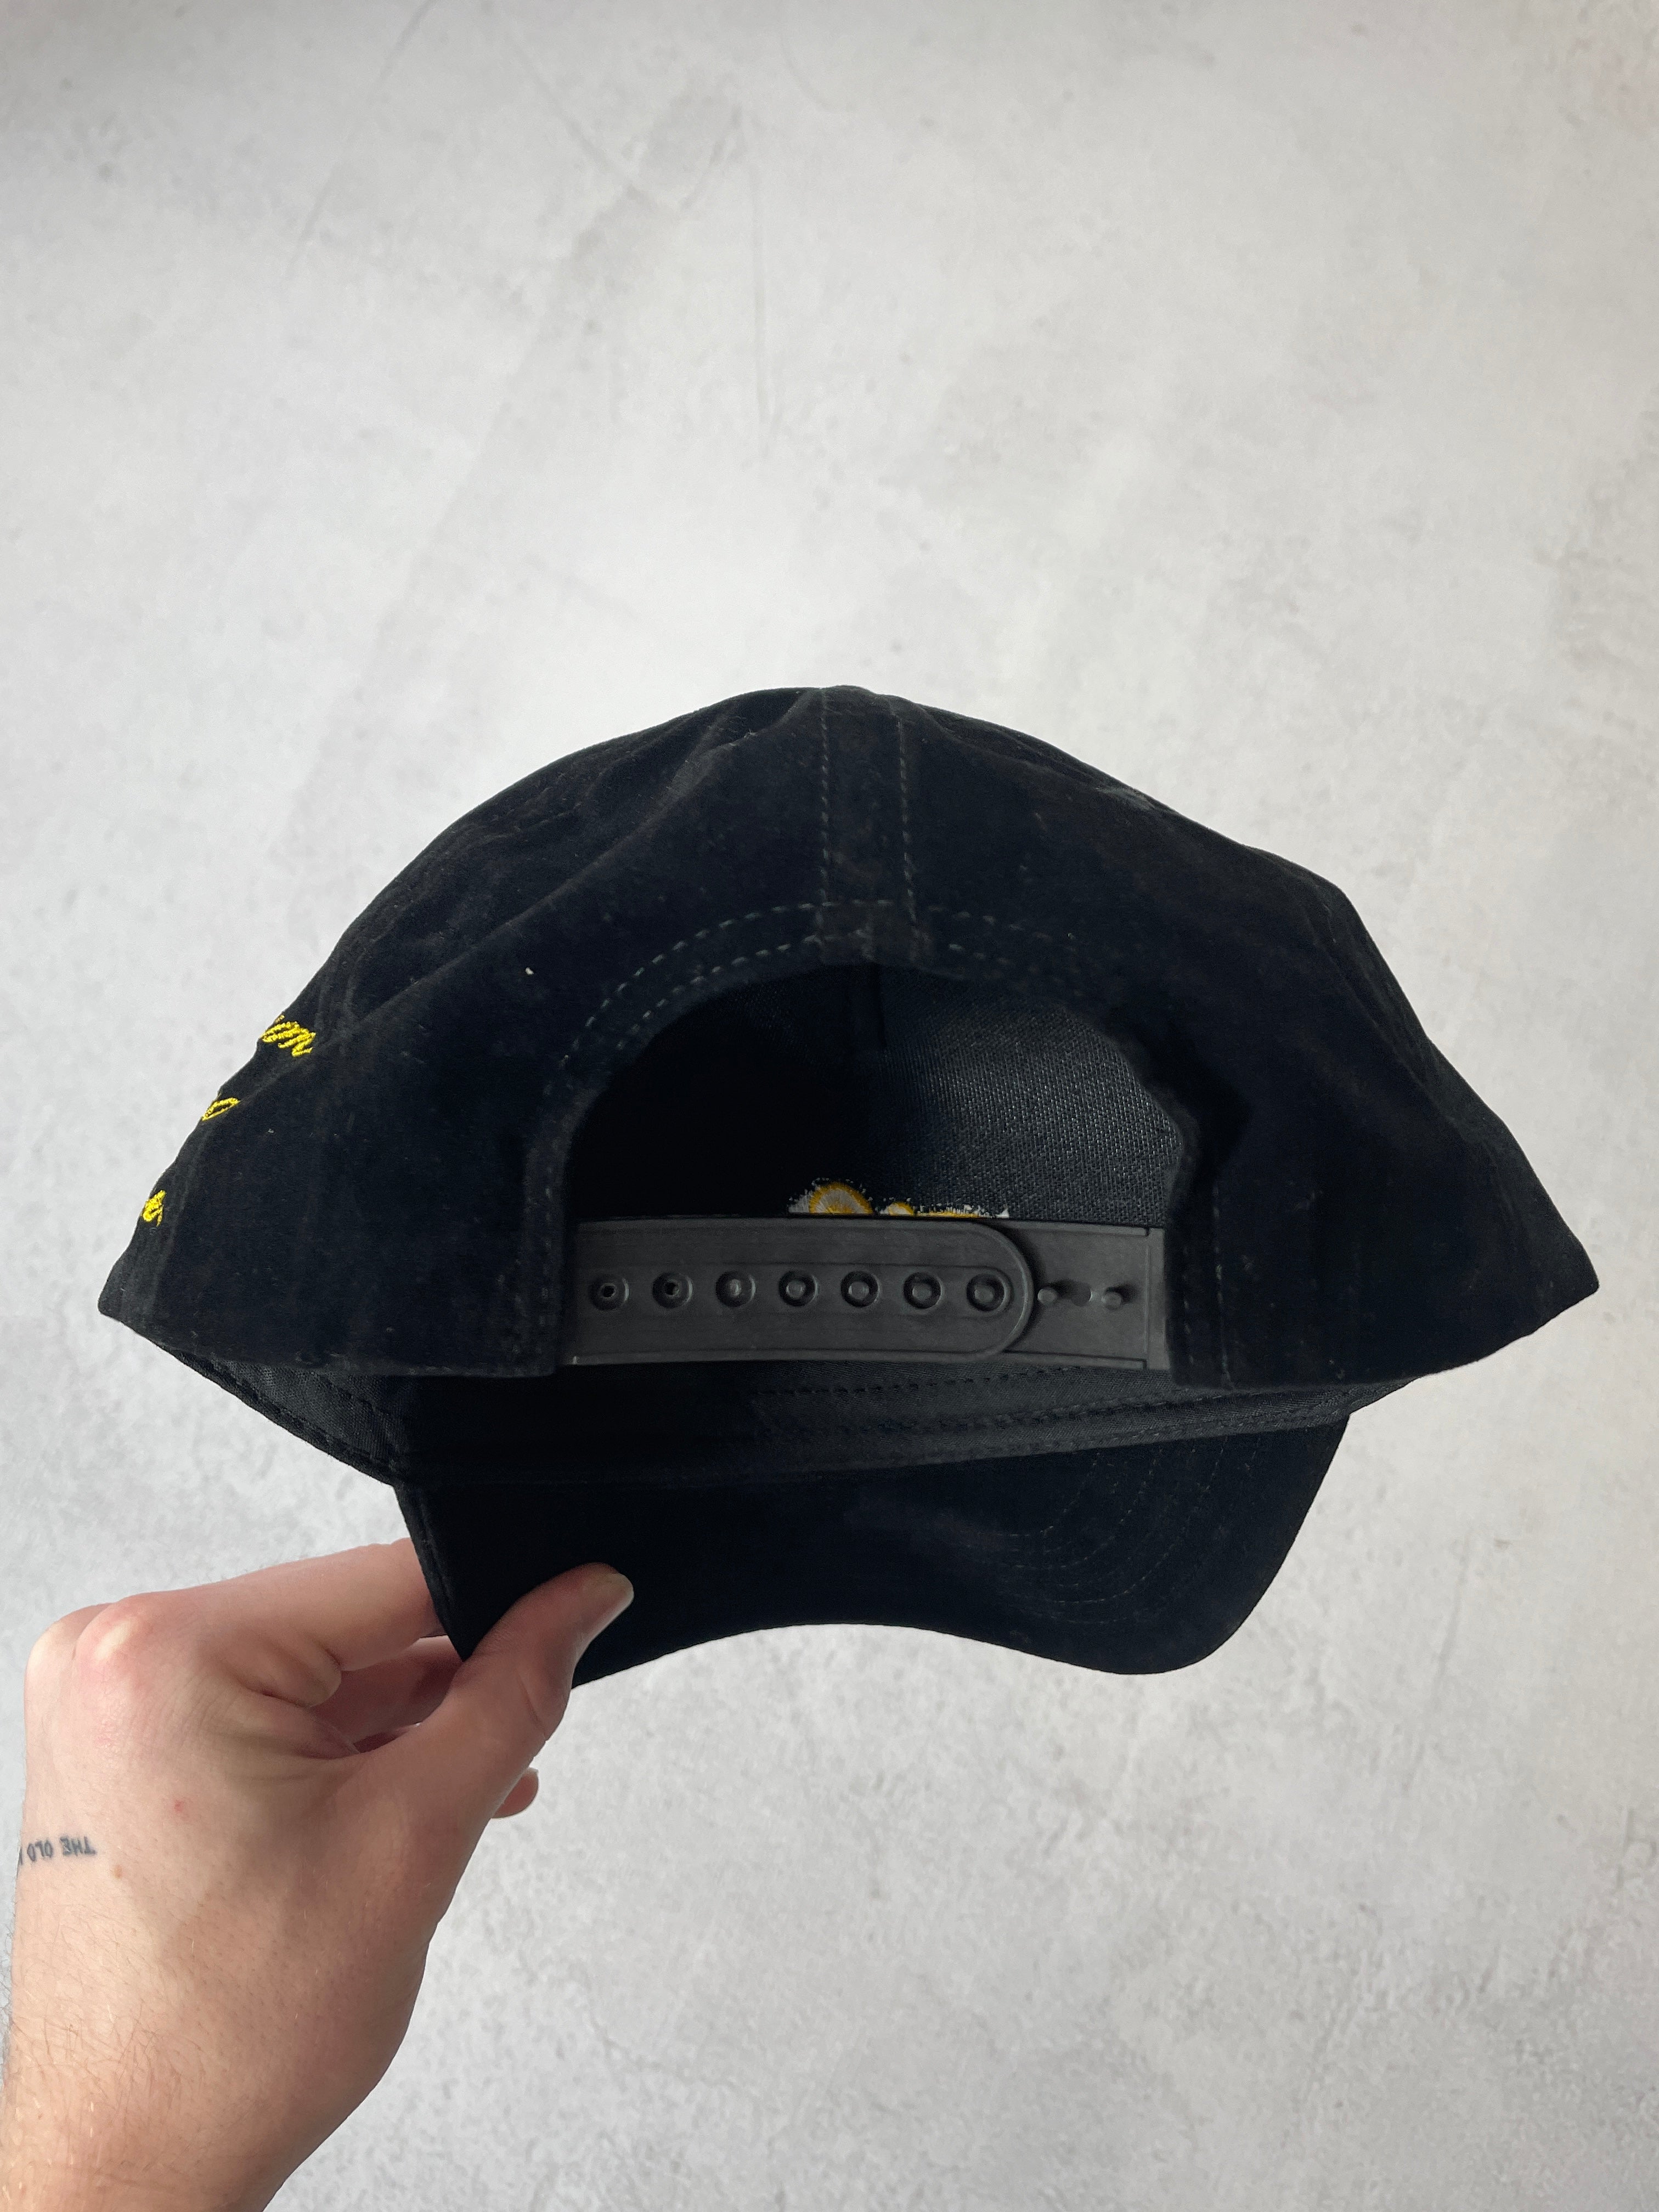 Vibn Suede Snap-Back Hat